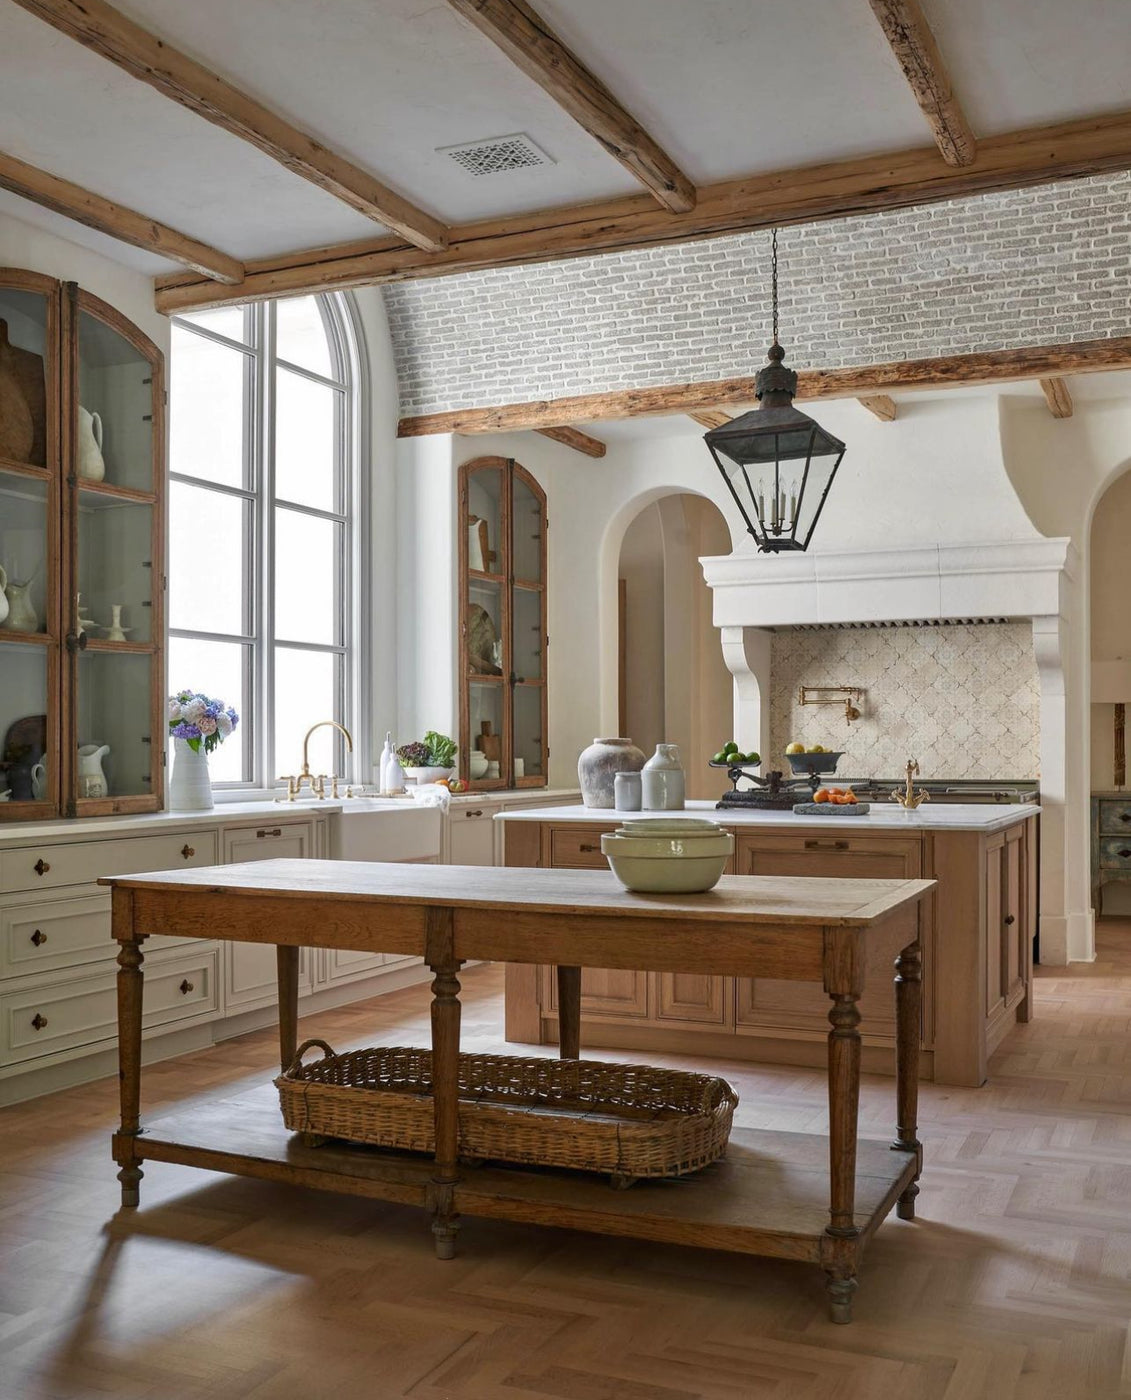 MATERIAL Designer Partnerships: Luxurious Kitchen Interiors